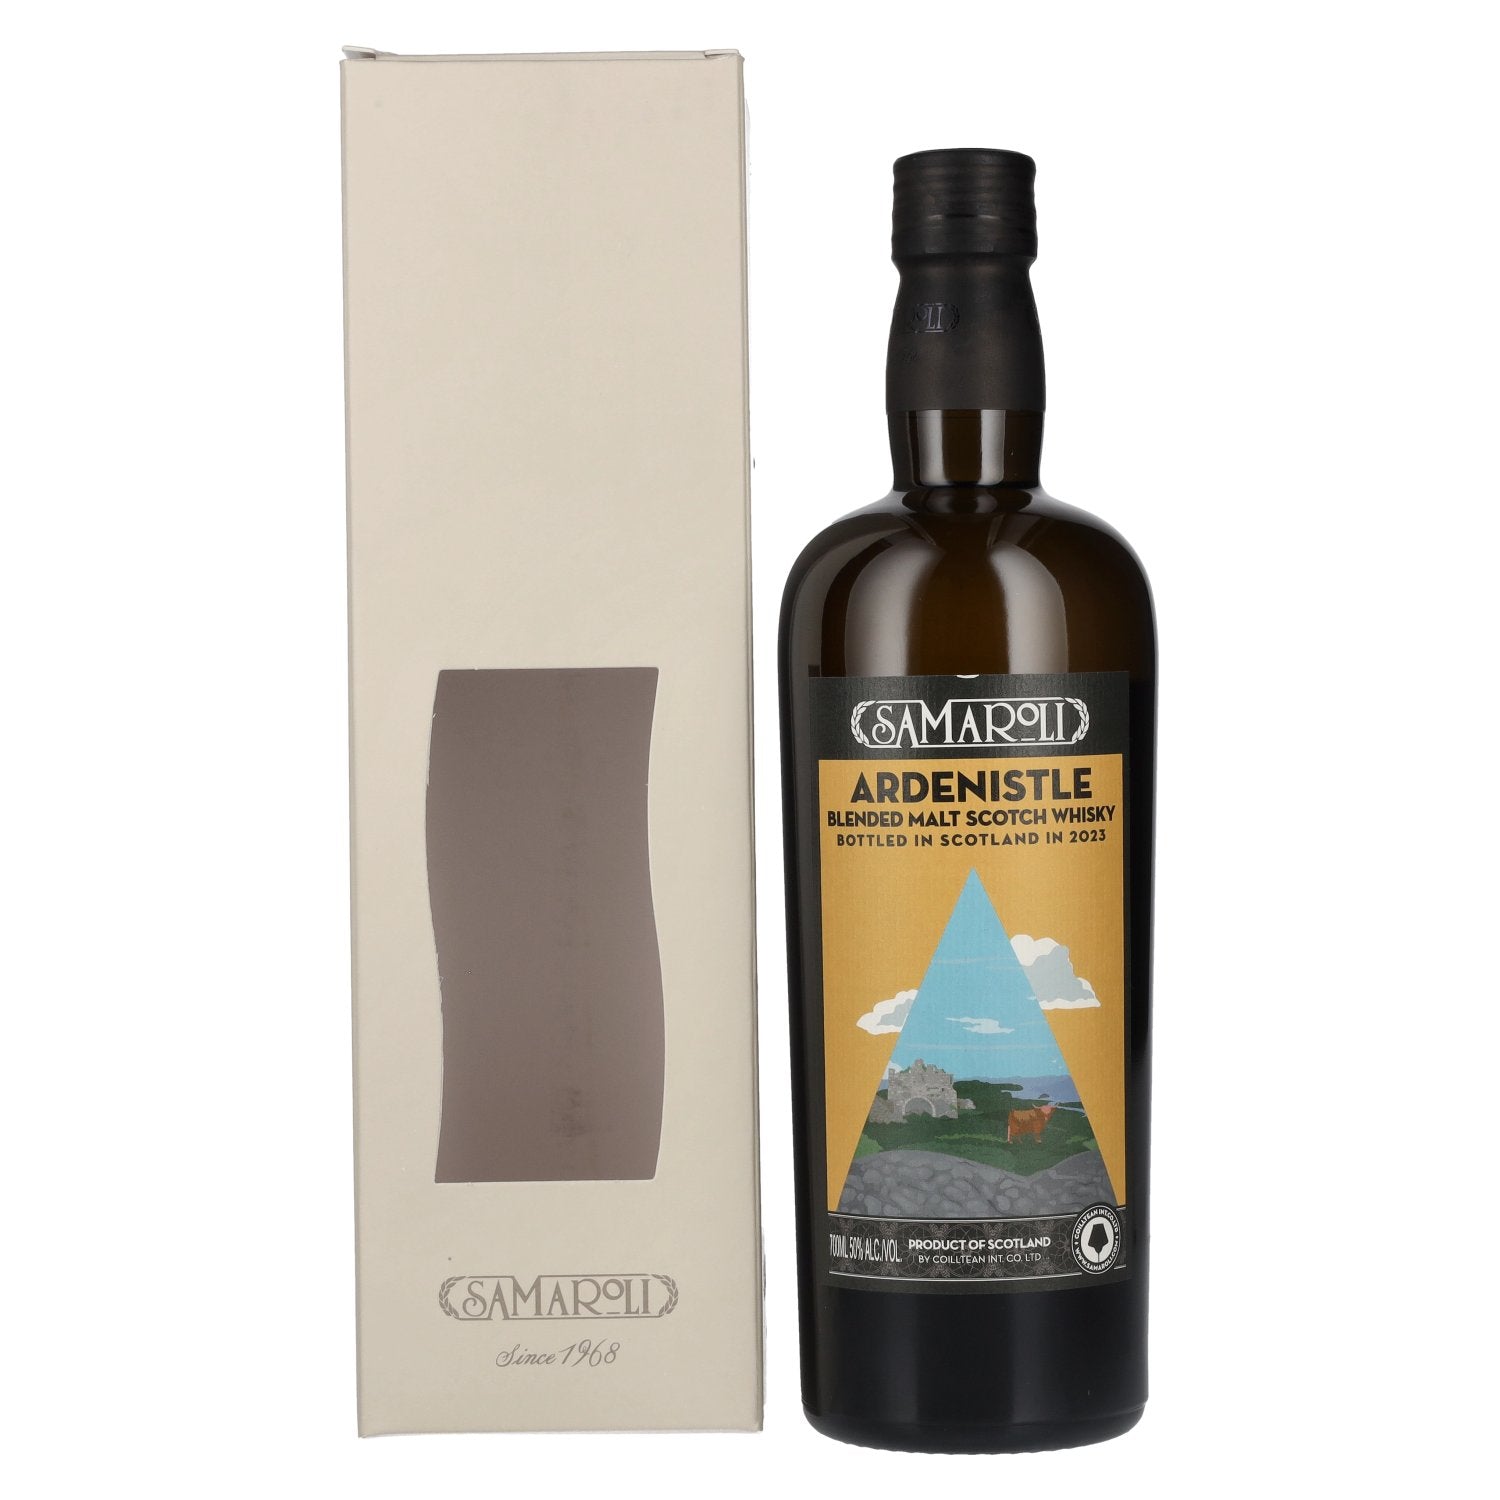 Samaroli ARDENISTLE Blended Malt Scotch Whisky 2023 50% Vol. 0,7l in Giftbox